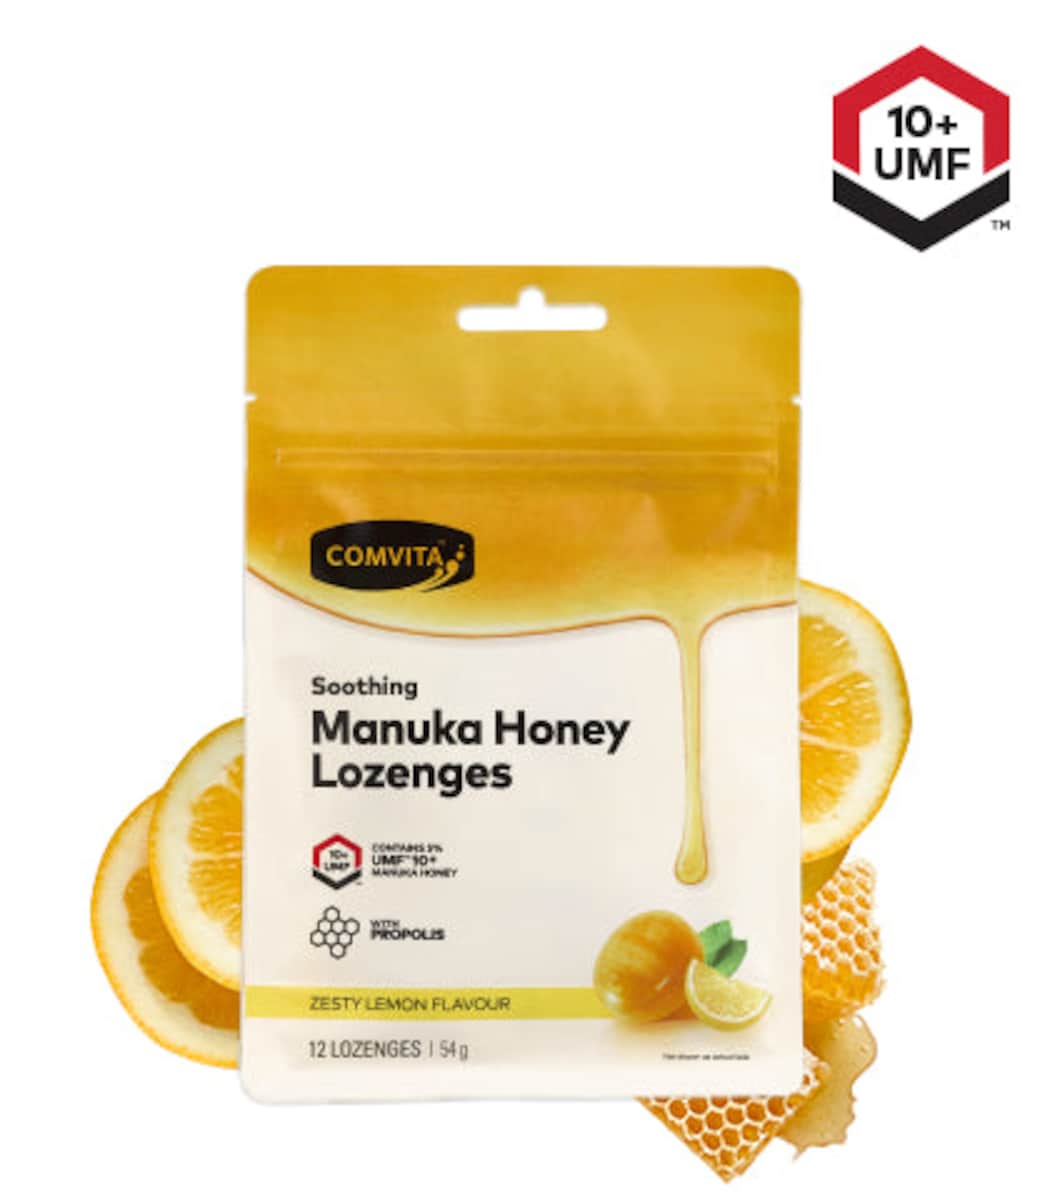 Comvita Soothing Manuka Honey Lozenges With Propolis 12 Pack